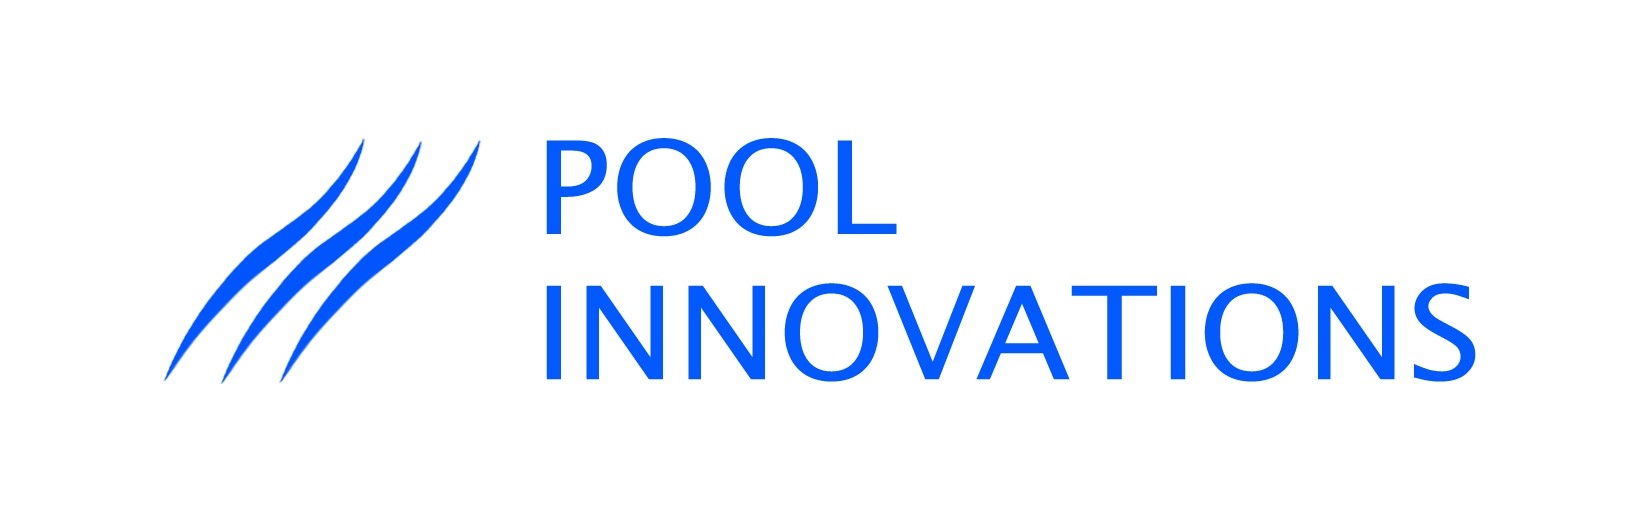 pool innovations logo